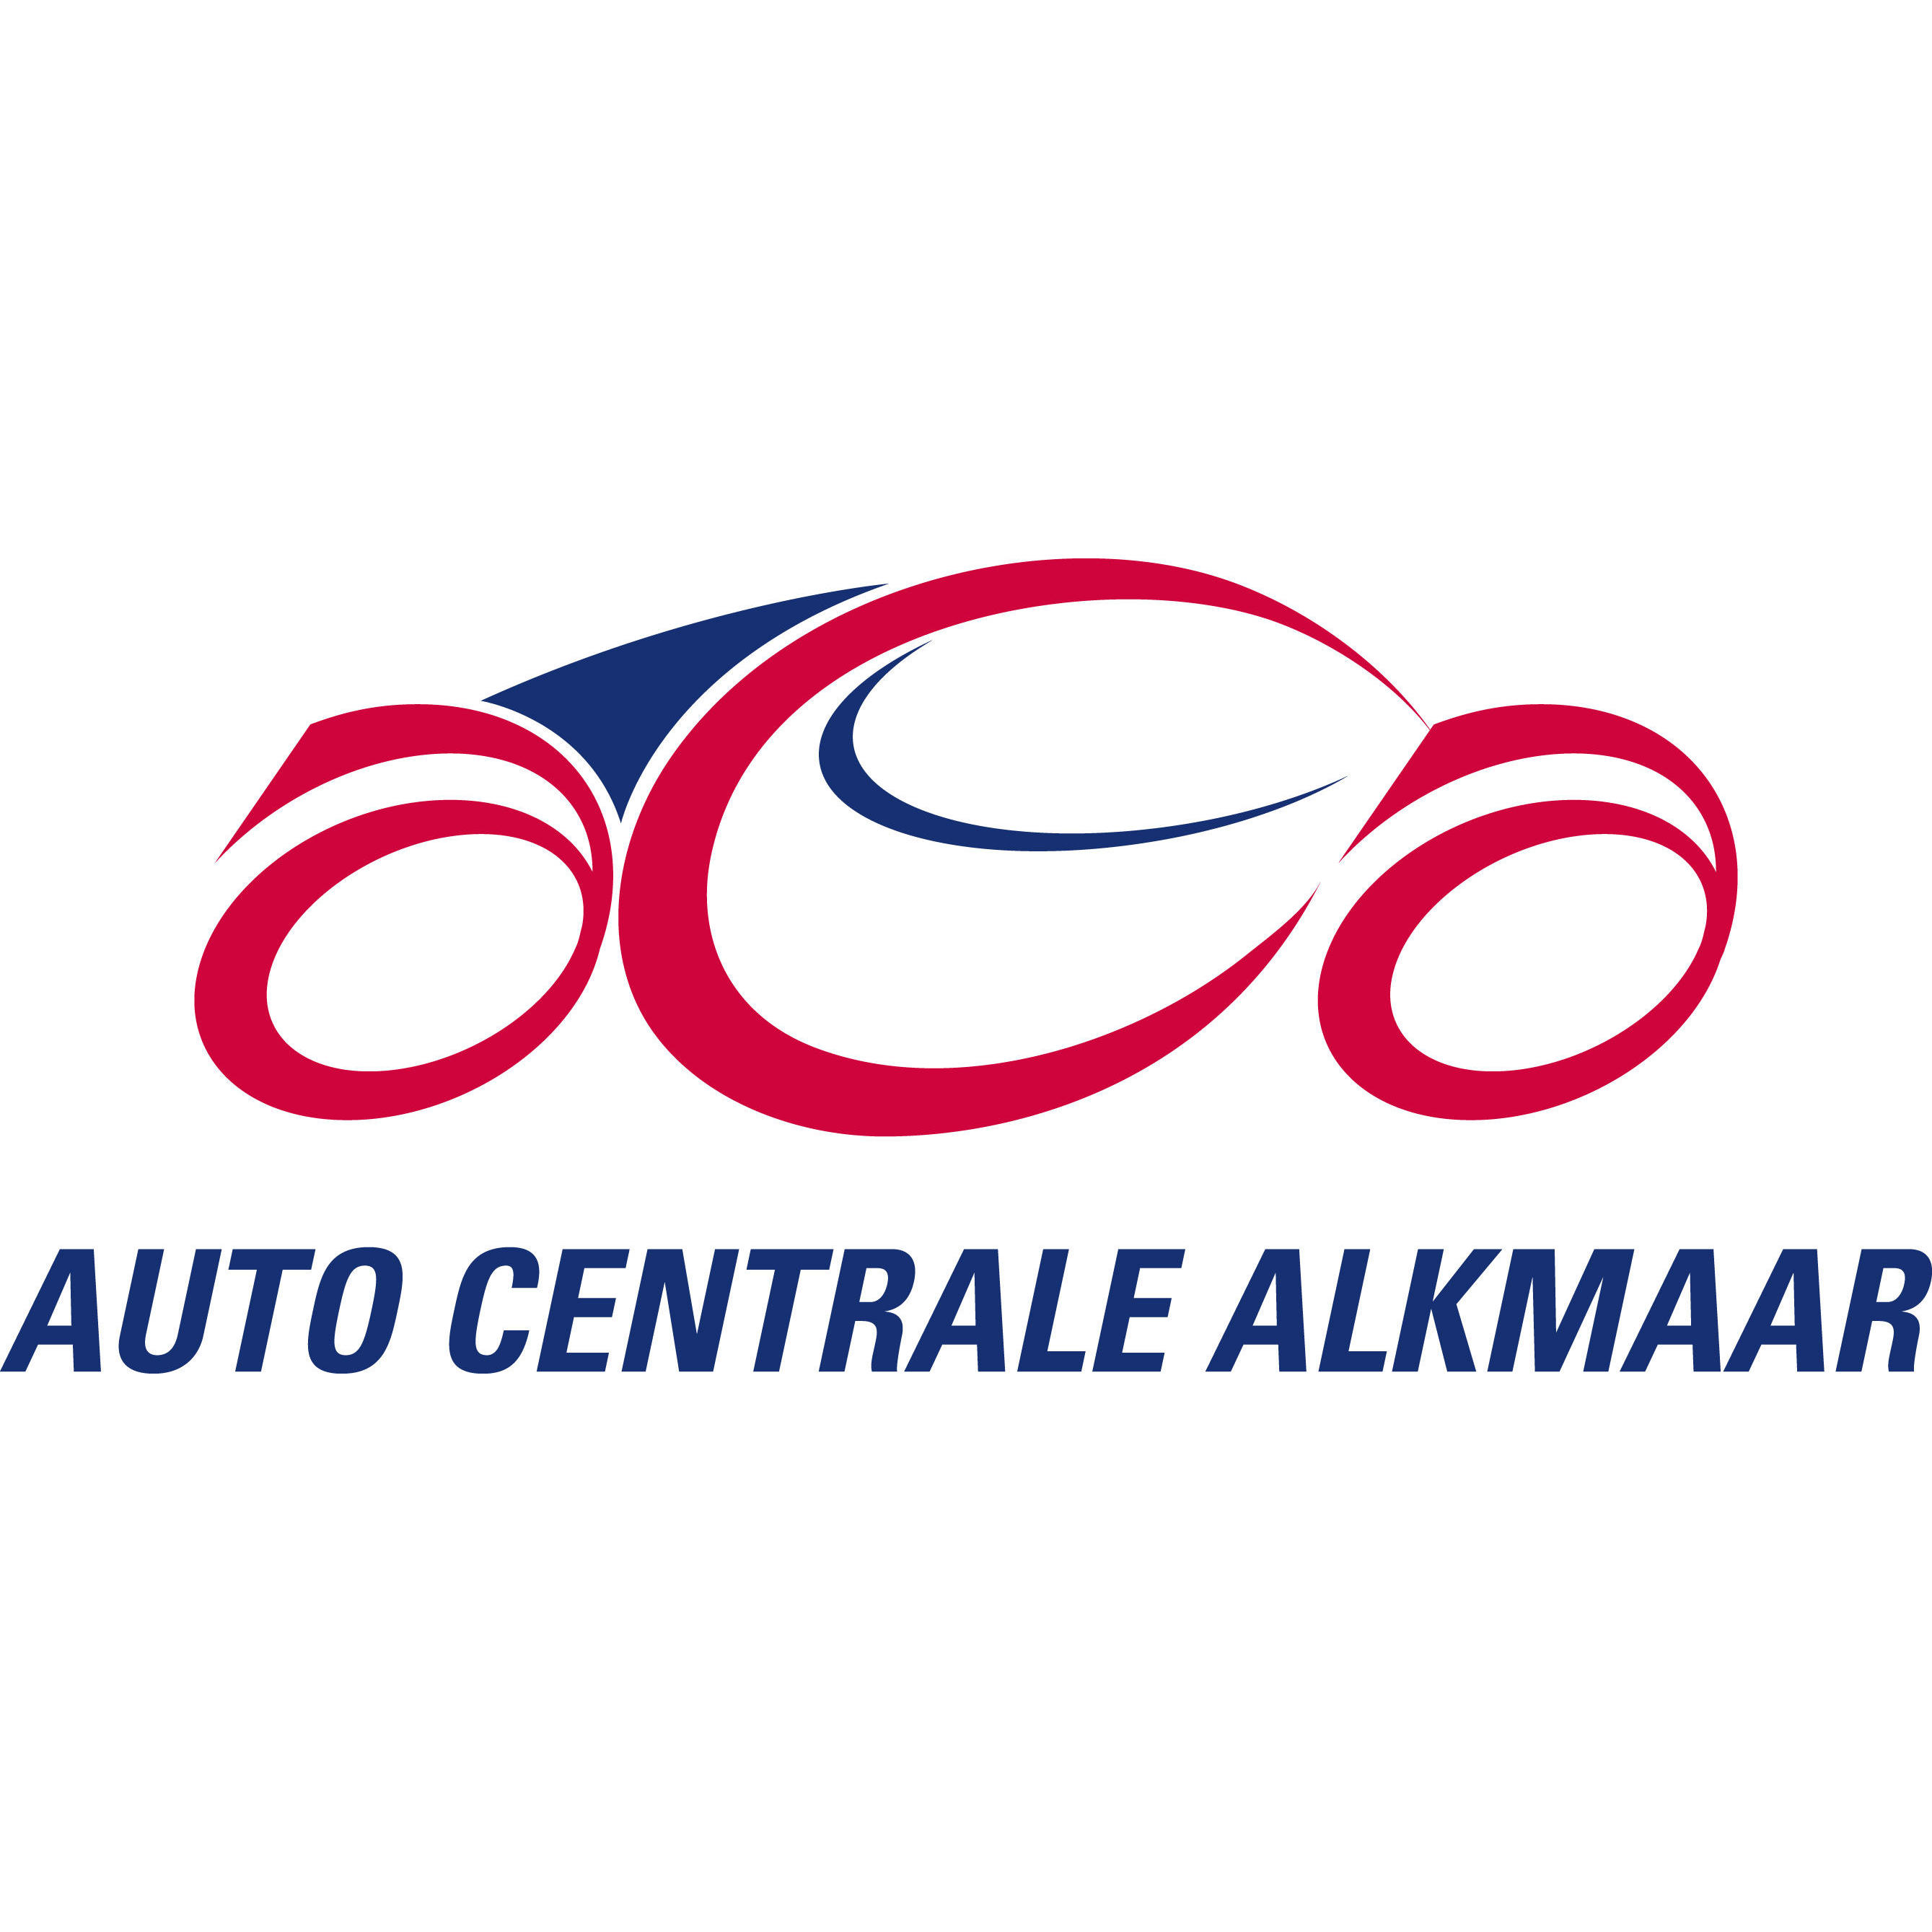 Auto Centrale Alkmaar Logo